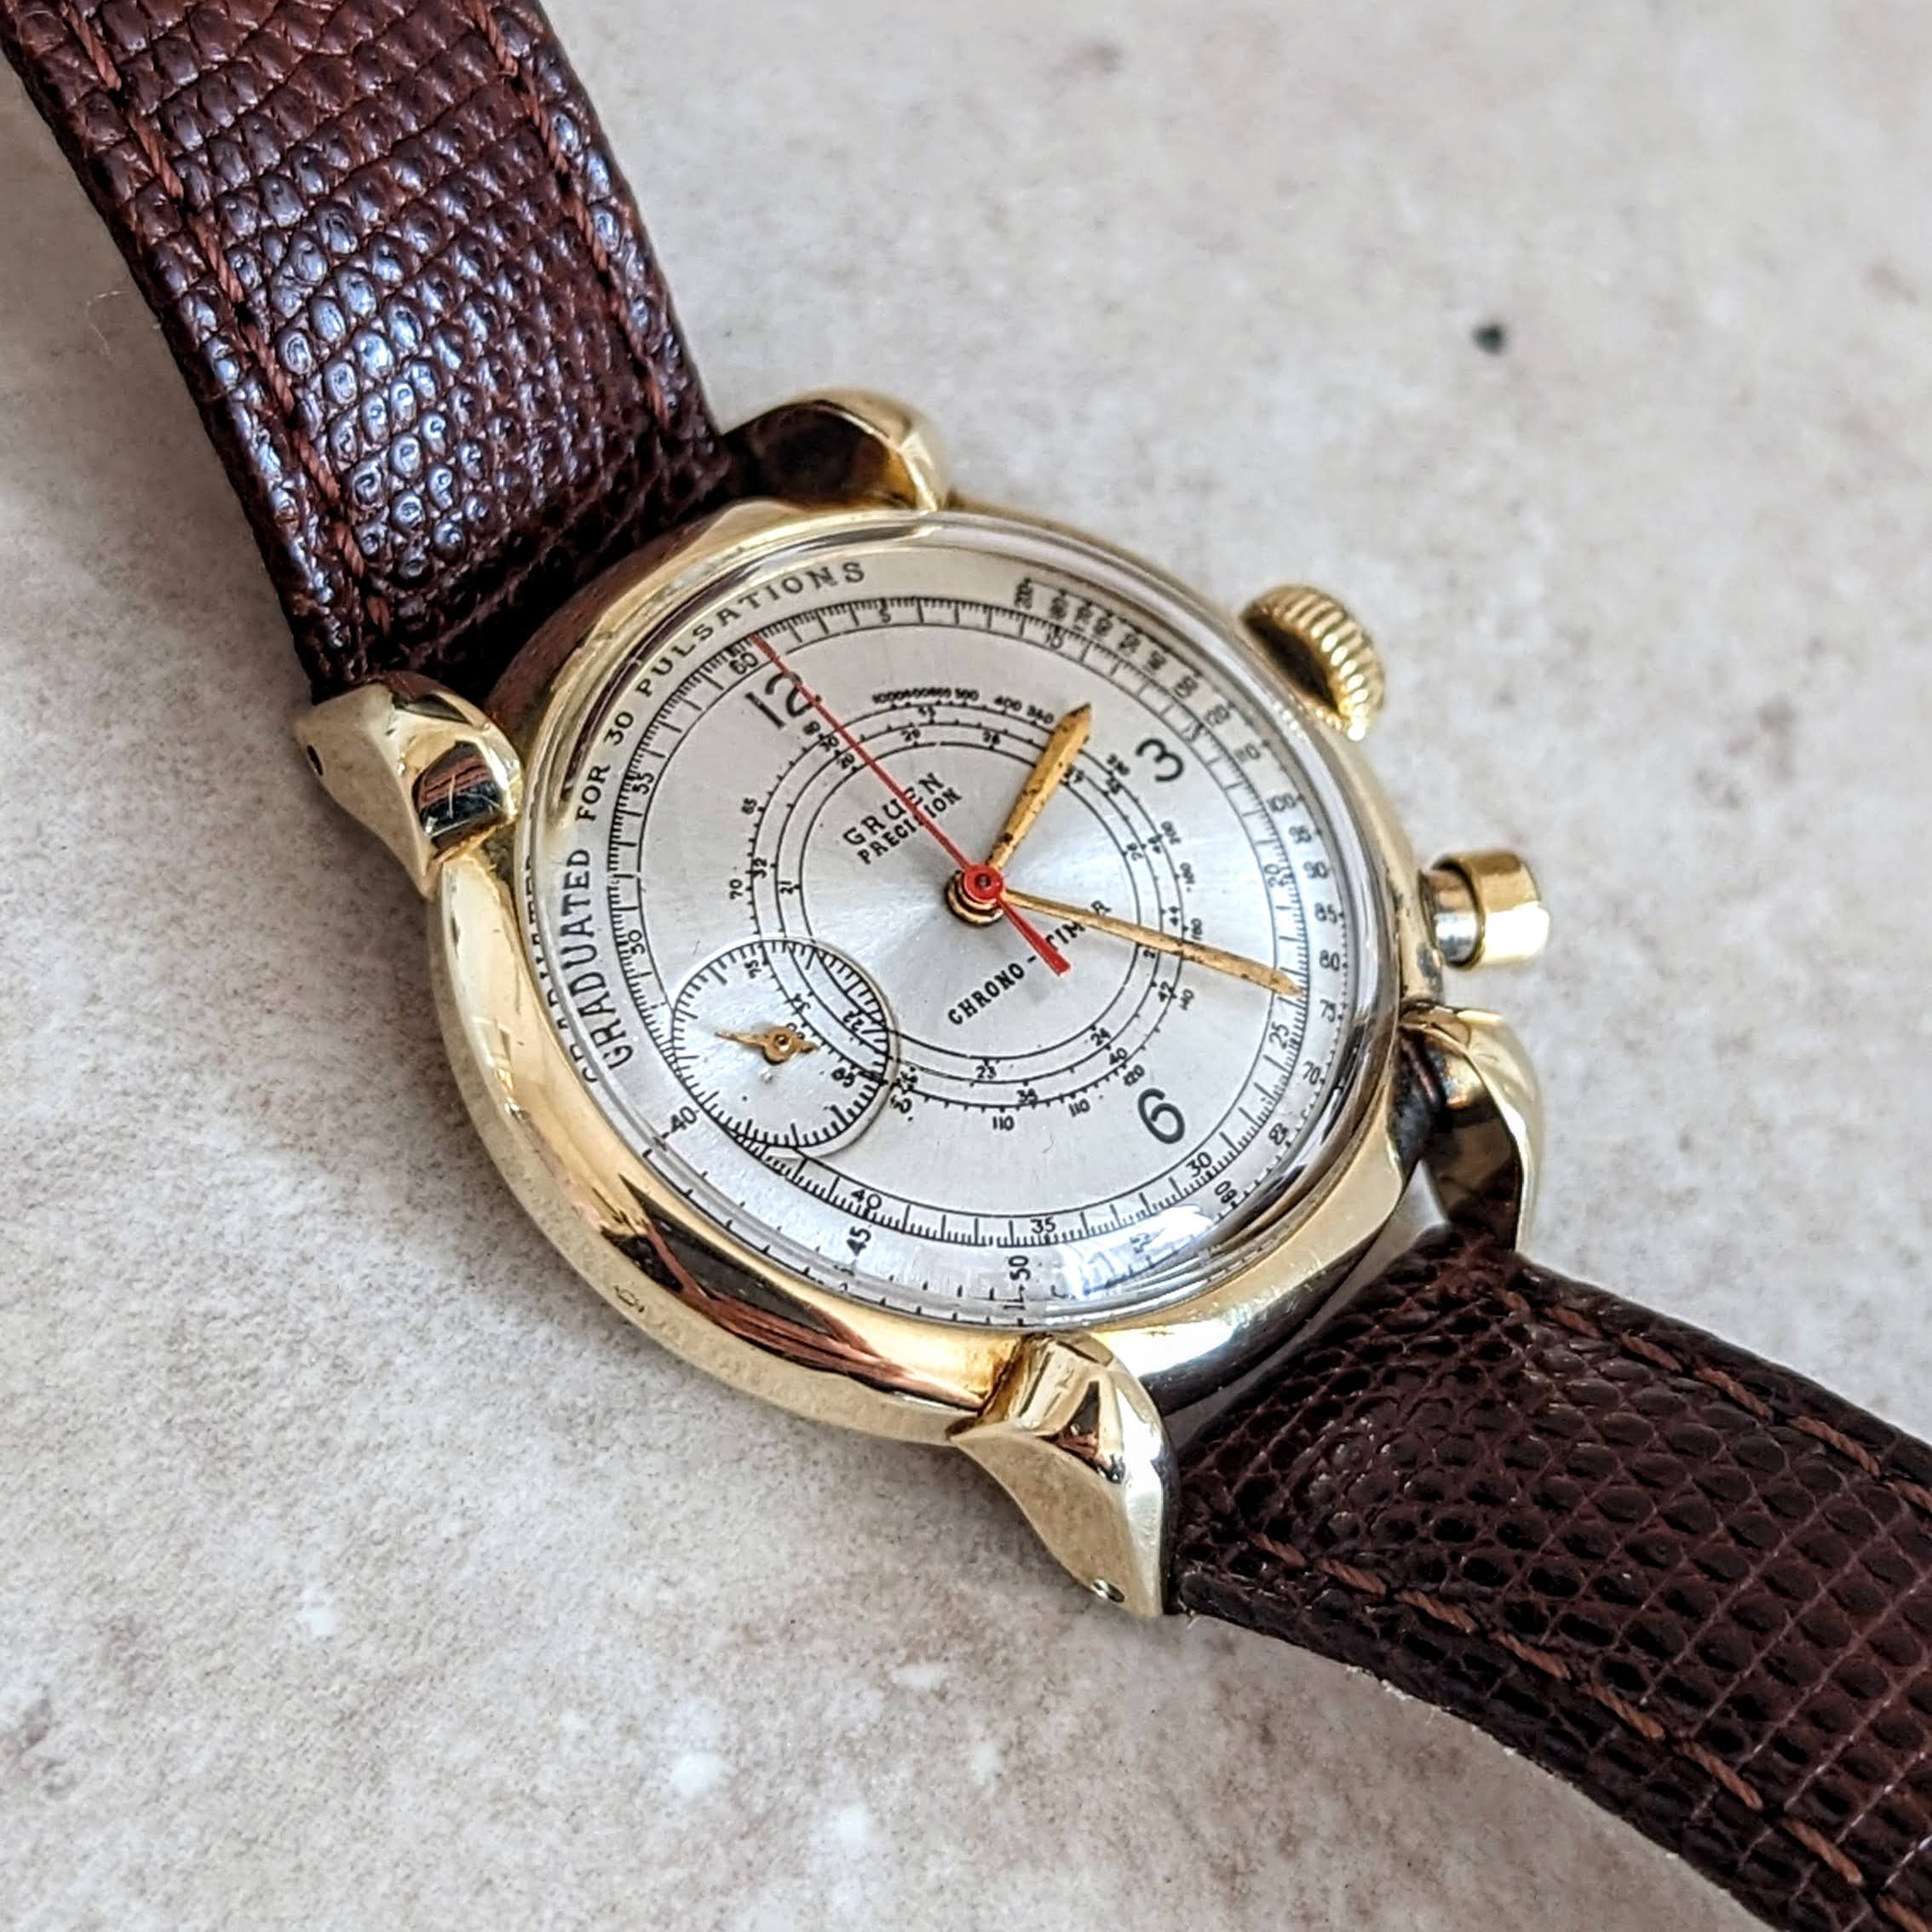 14K GOLD GRUEN Precision Chrono-Timer Wristwatch Doctors Pulsometer Vintage Watch